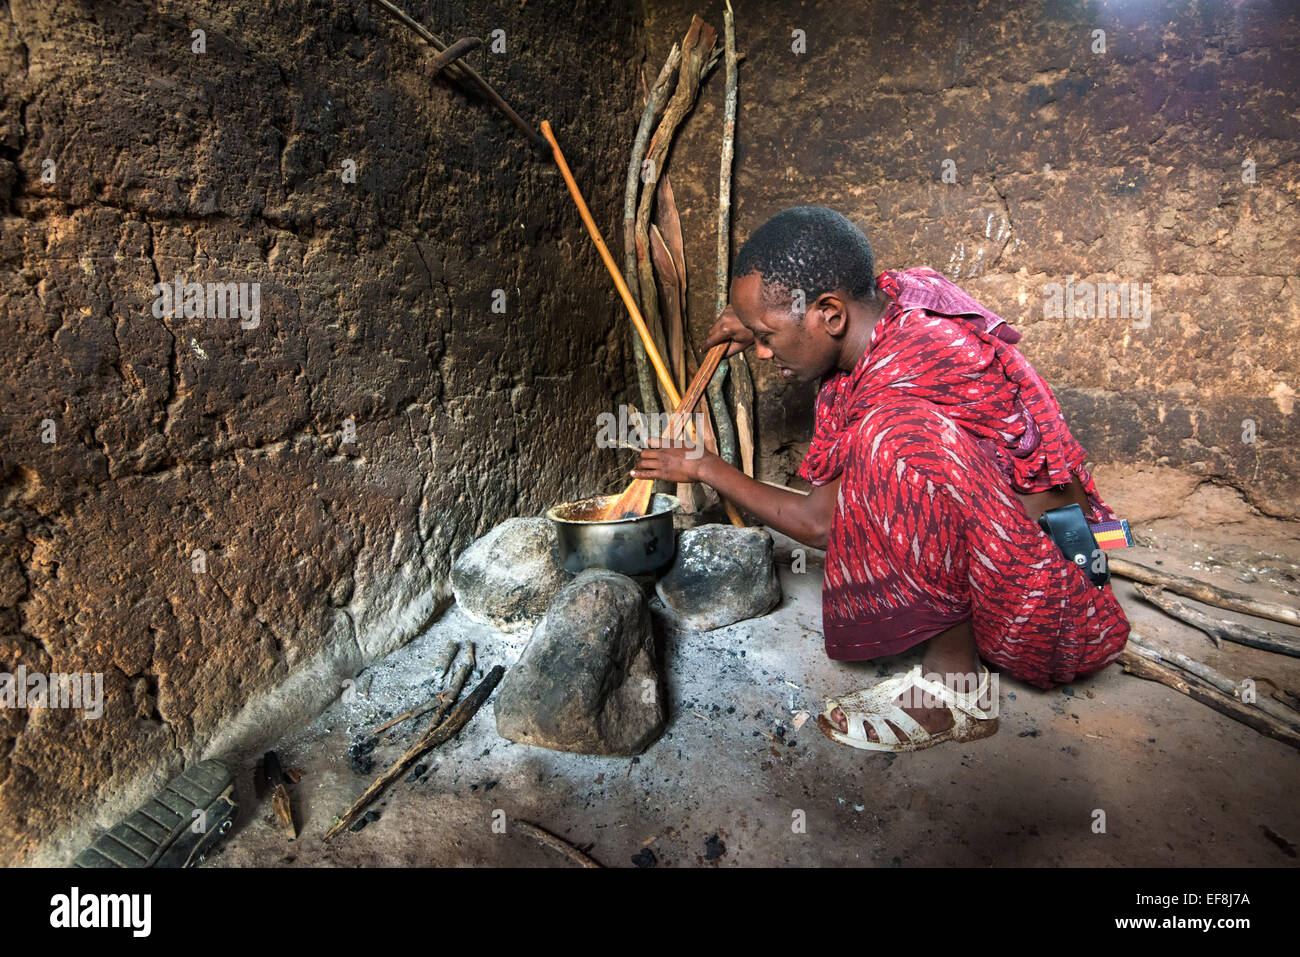 Masai man cooking Stock Photo